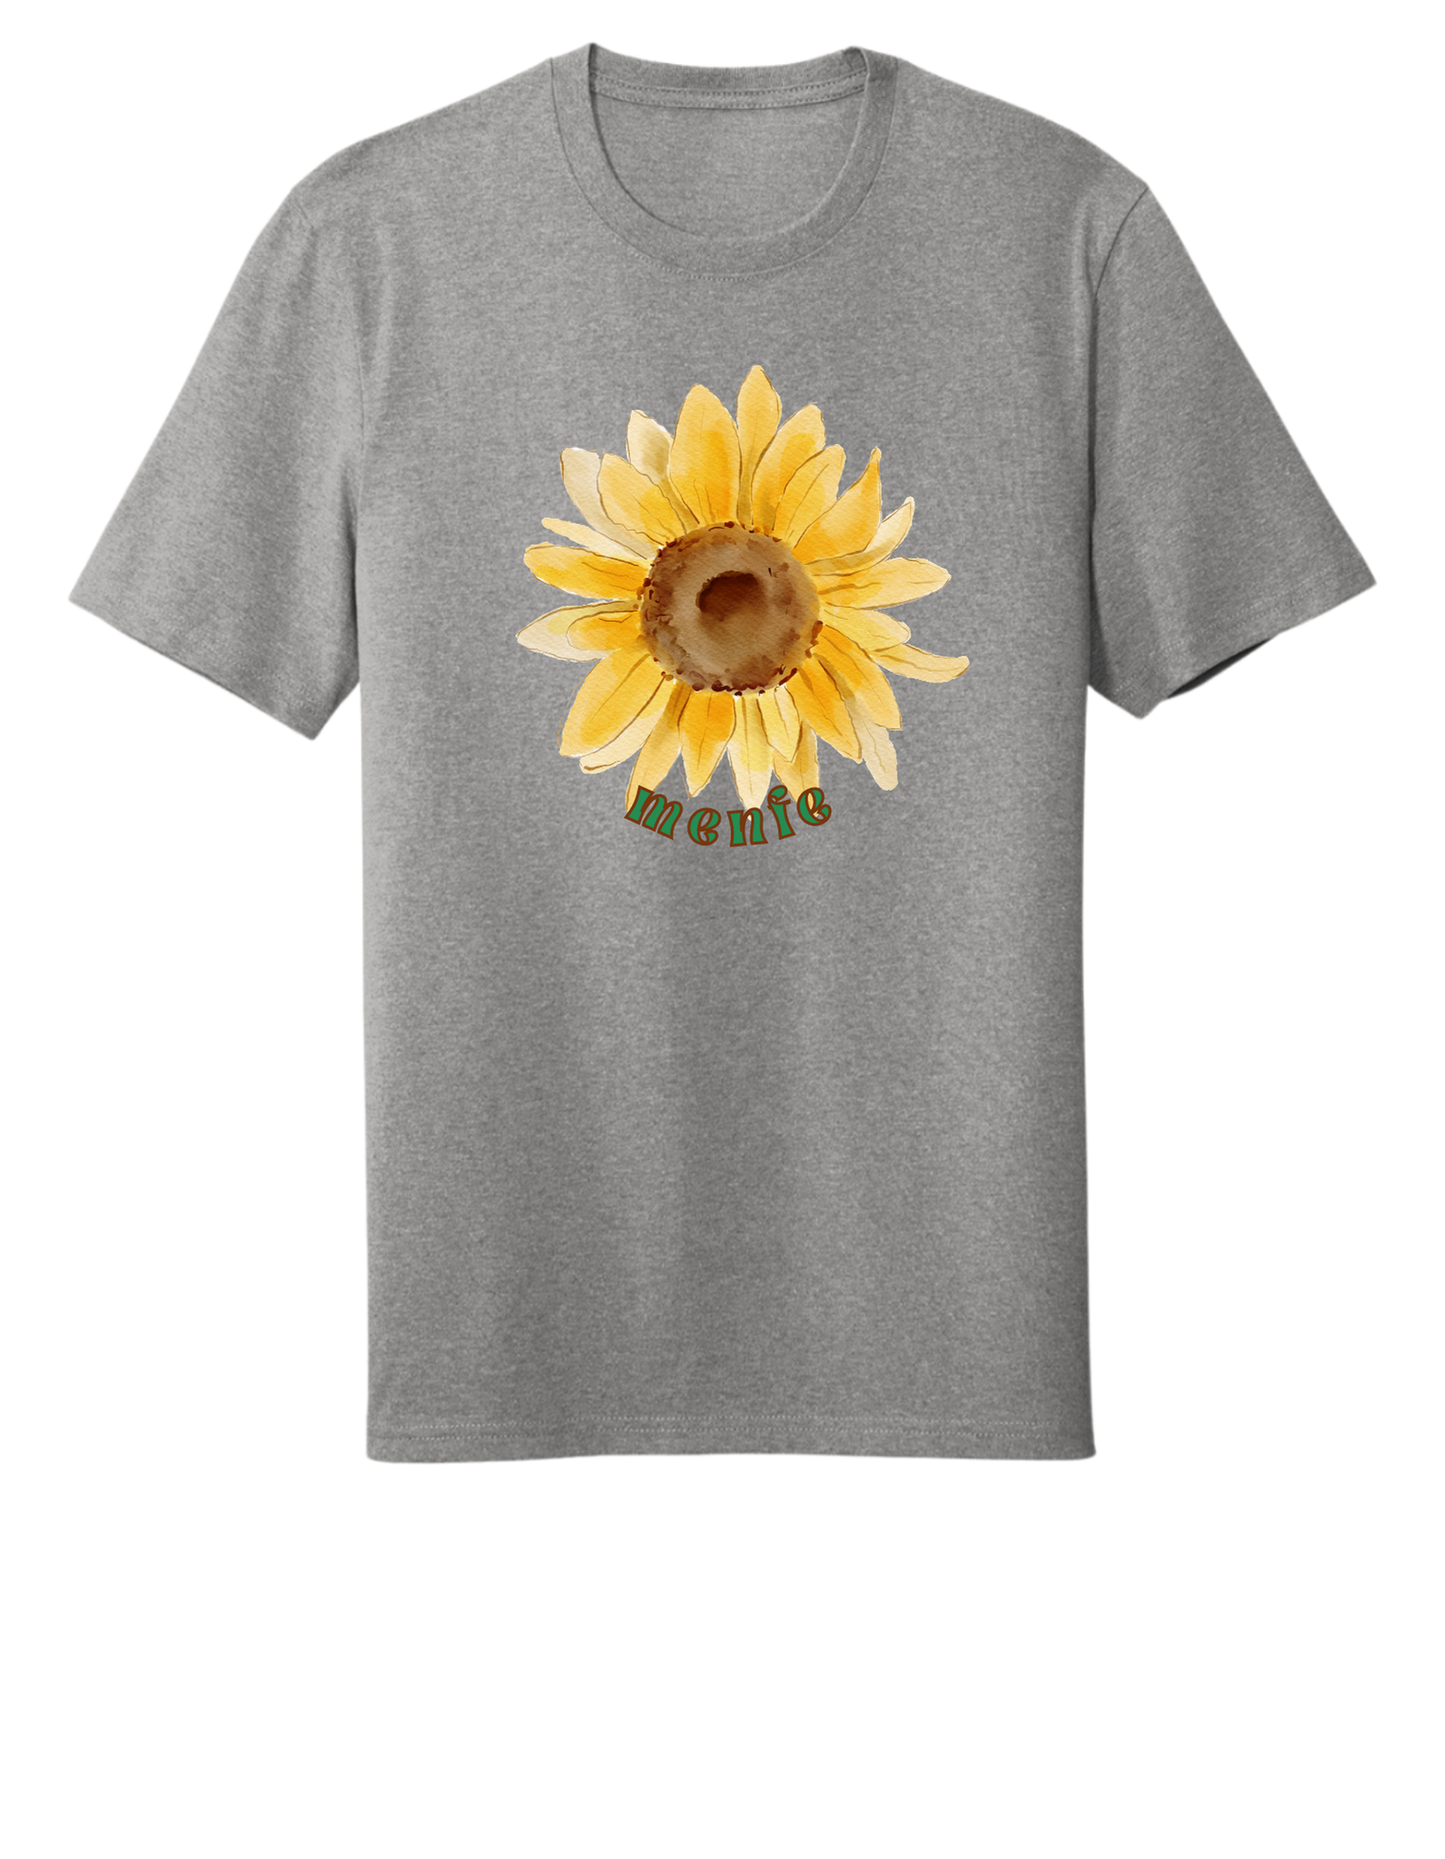 Sunflower T-Shirt - Black, Light Heather Grey and Navy Heather